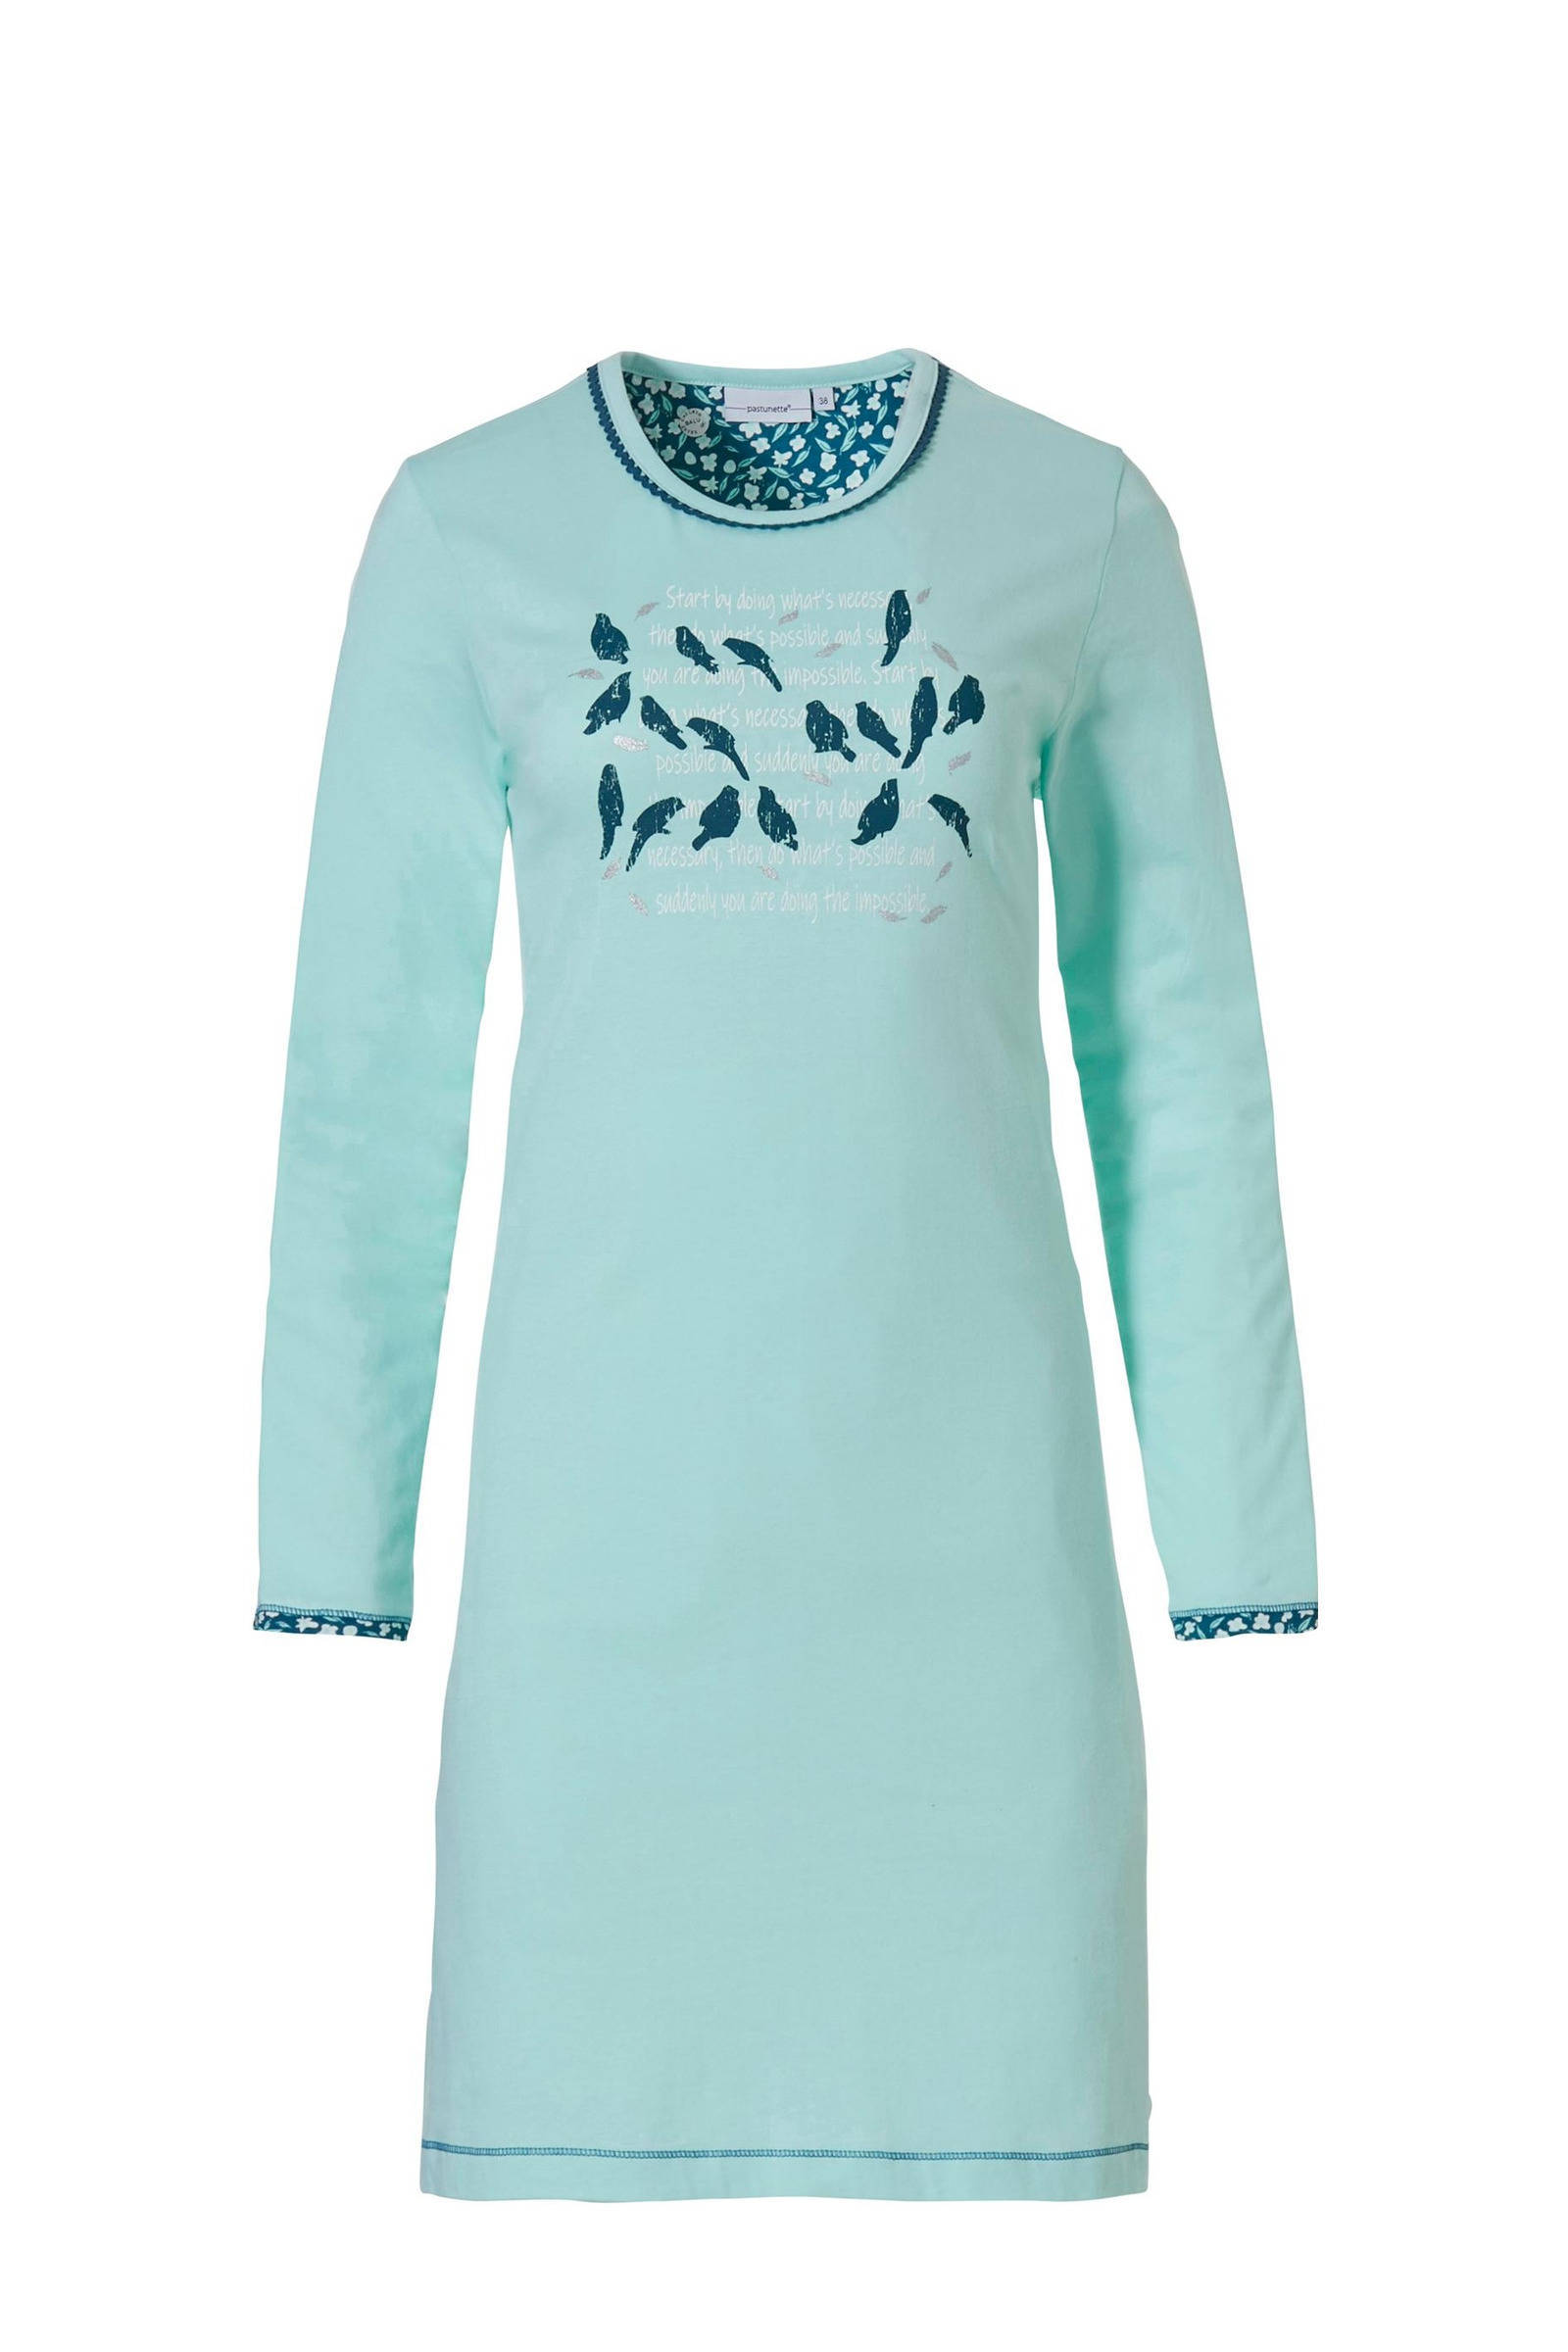 Pastunette Dames nachthemd 10212 141 3 Turquoise 40 online kopen